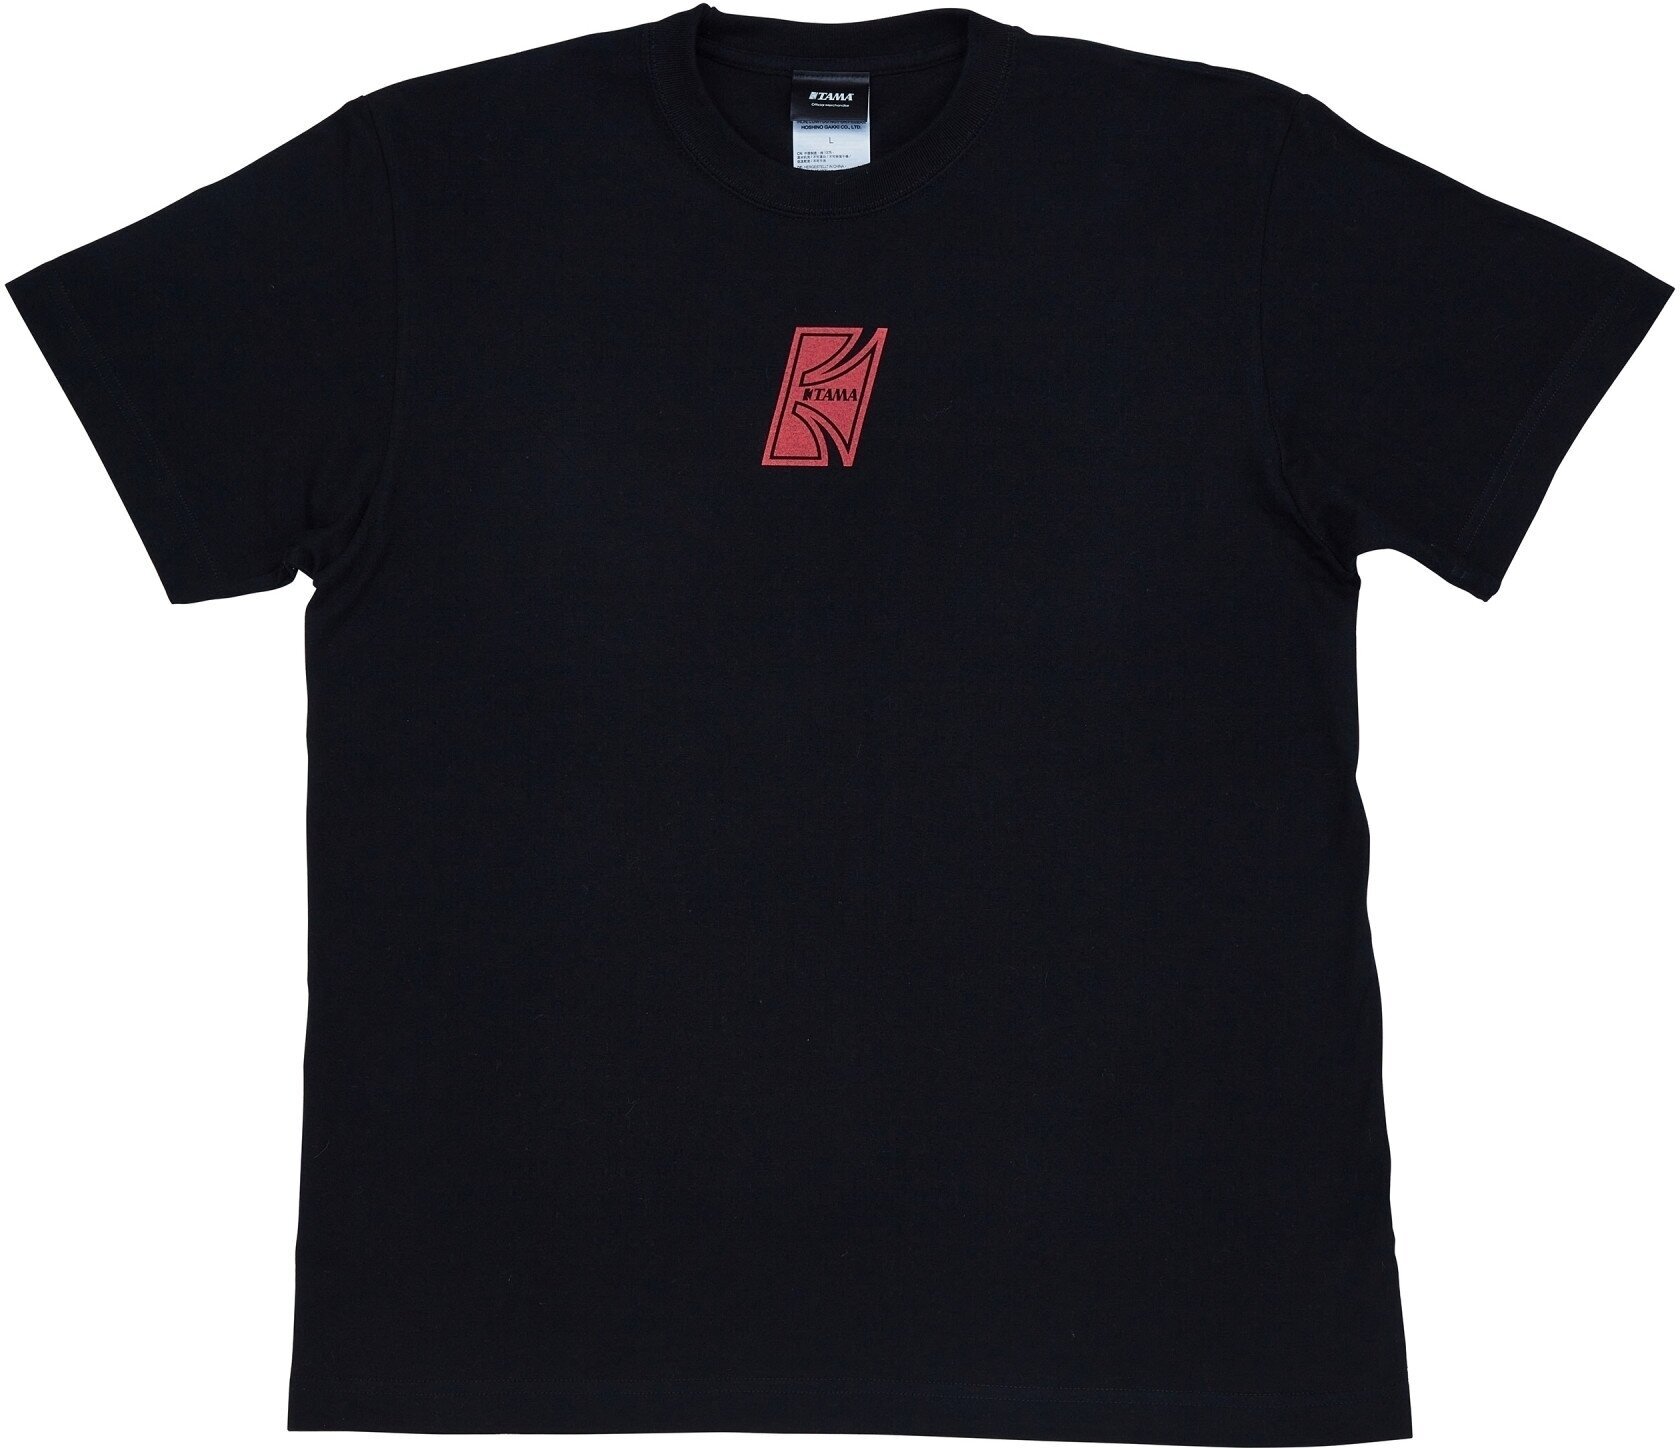 Shirt Tama Shirt TAMT006M Unisex Black M